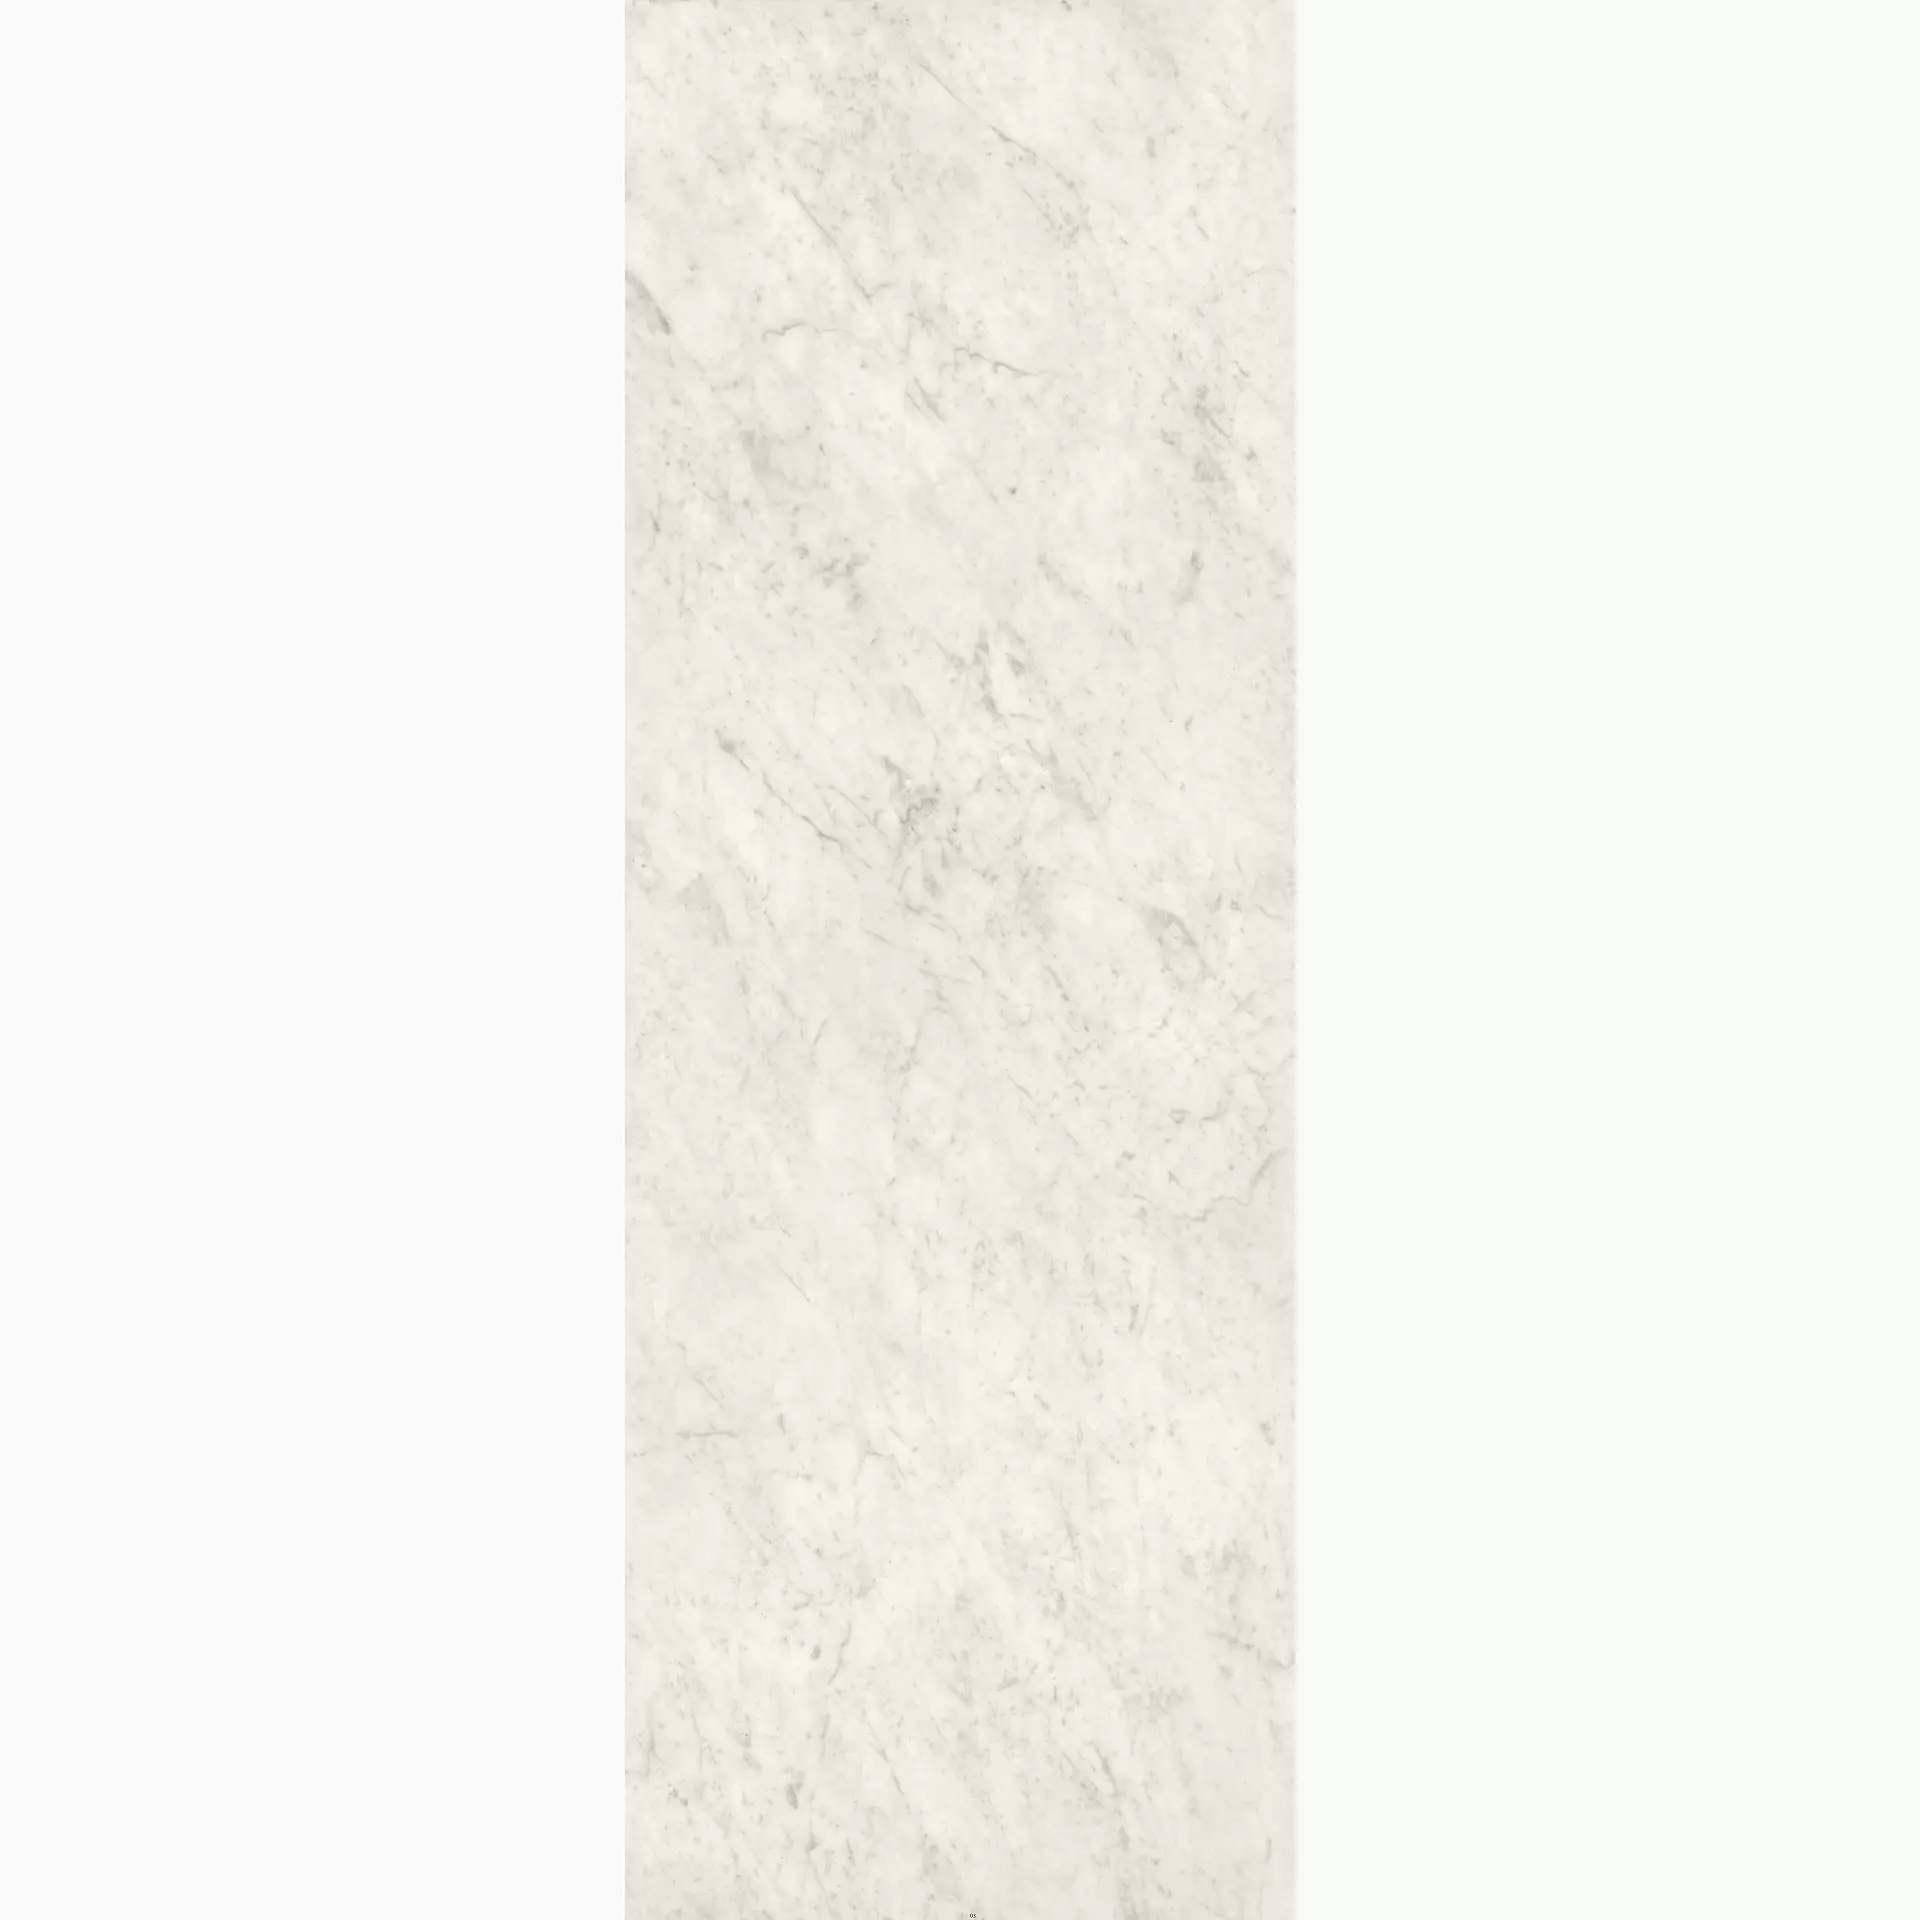 Cottodeste Kerlite Starlight Carrara White Smooth Protect Carrara White EK7SL30 antibakteriell glatt 100x300cm rektifiziert 3,5mm